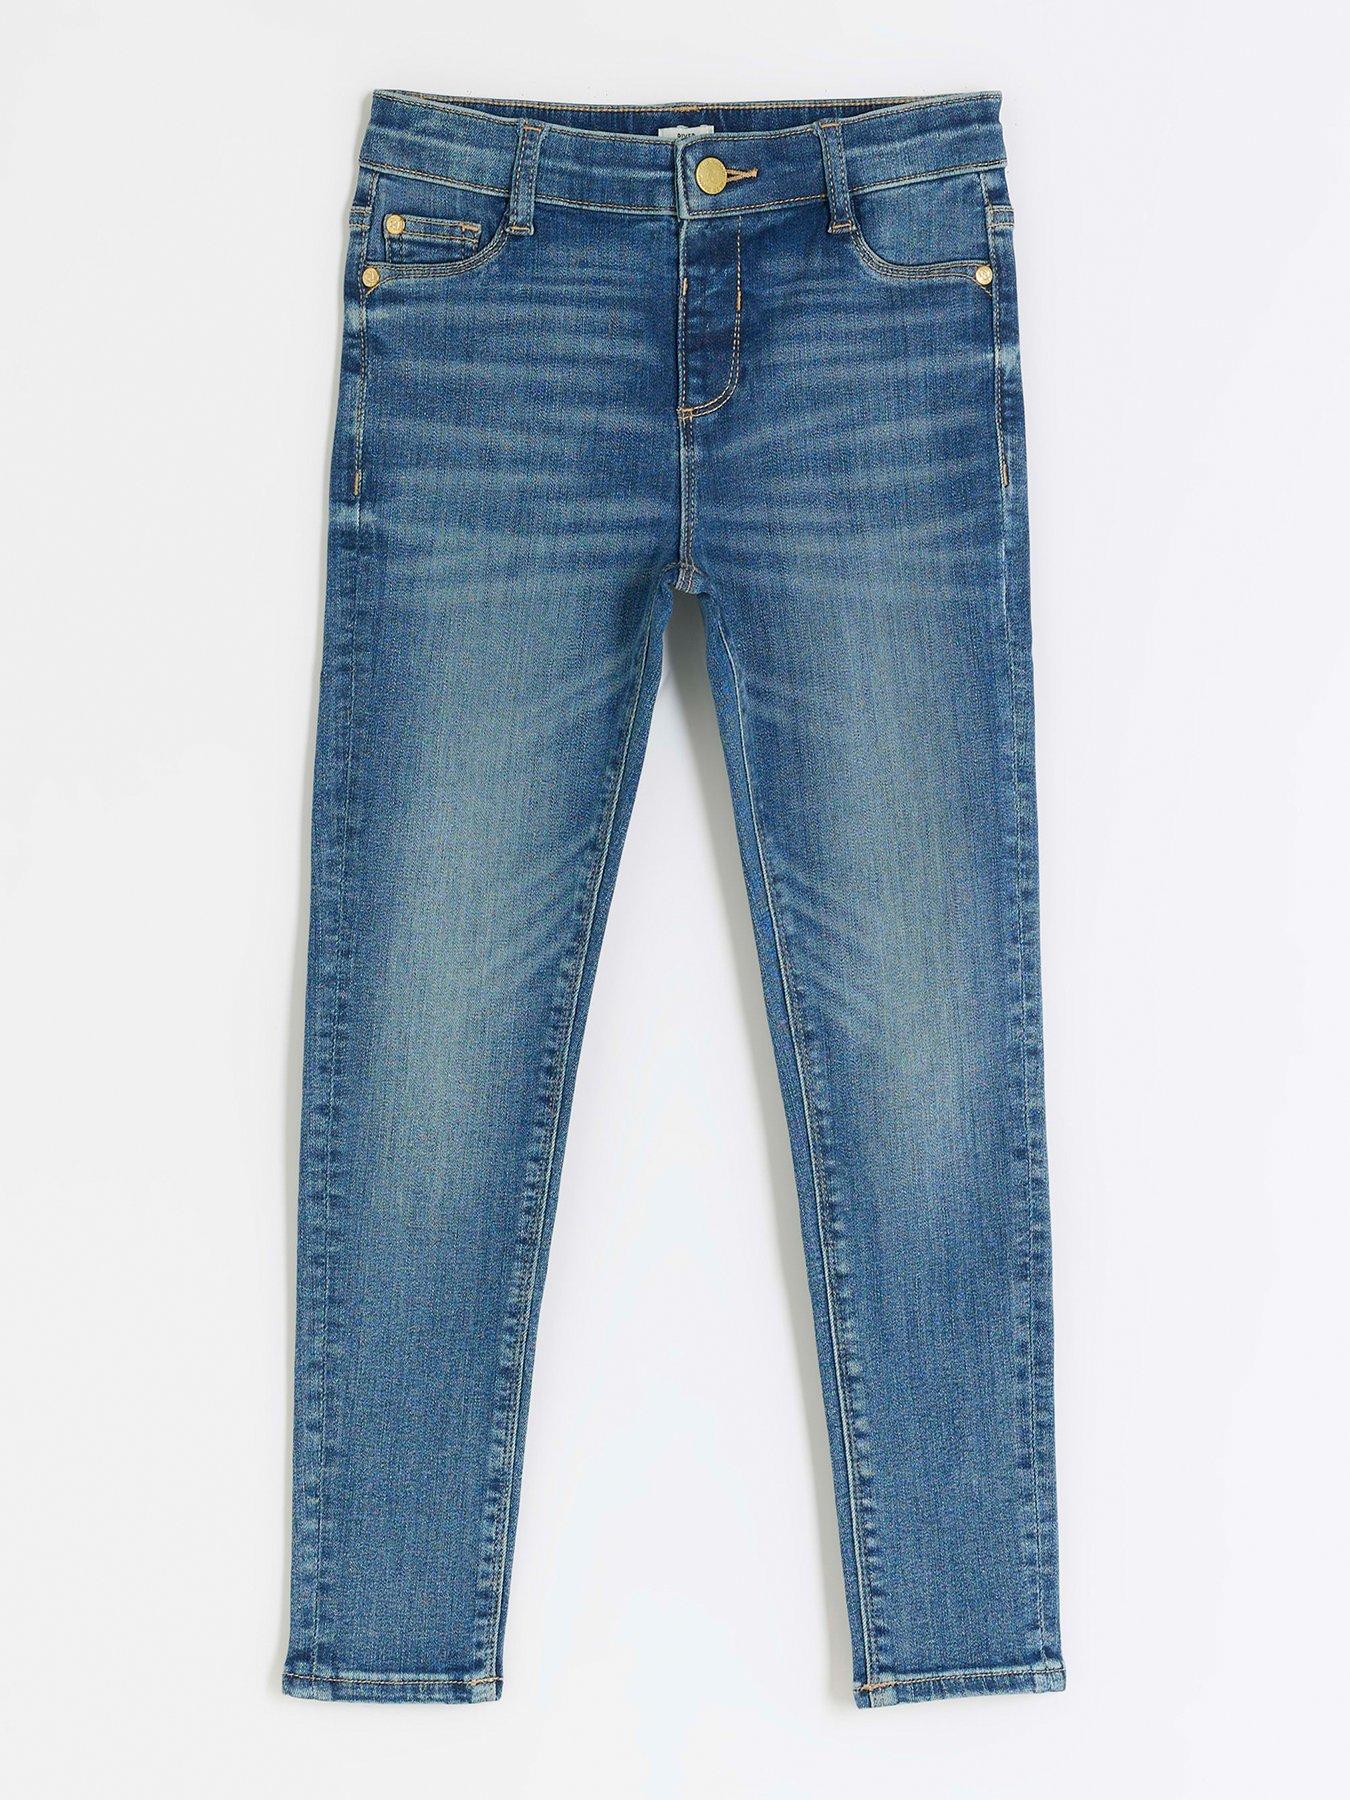 Girls Jeans Pants Size 7 Skinny Adjustable Waist Pockets Blue Snap Button  Kids